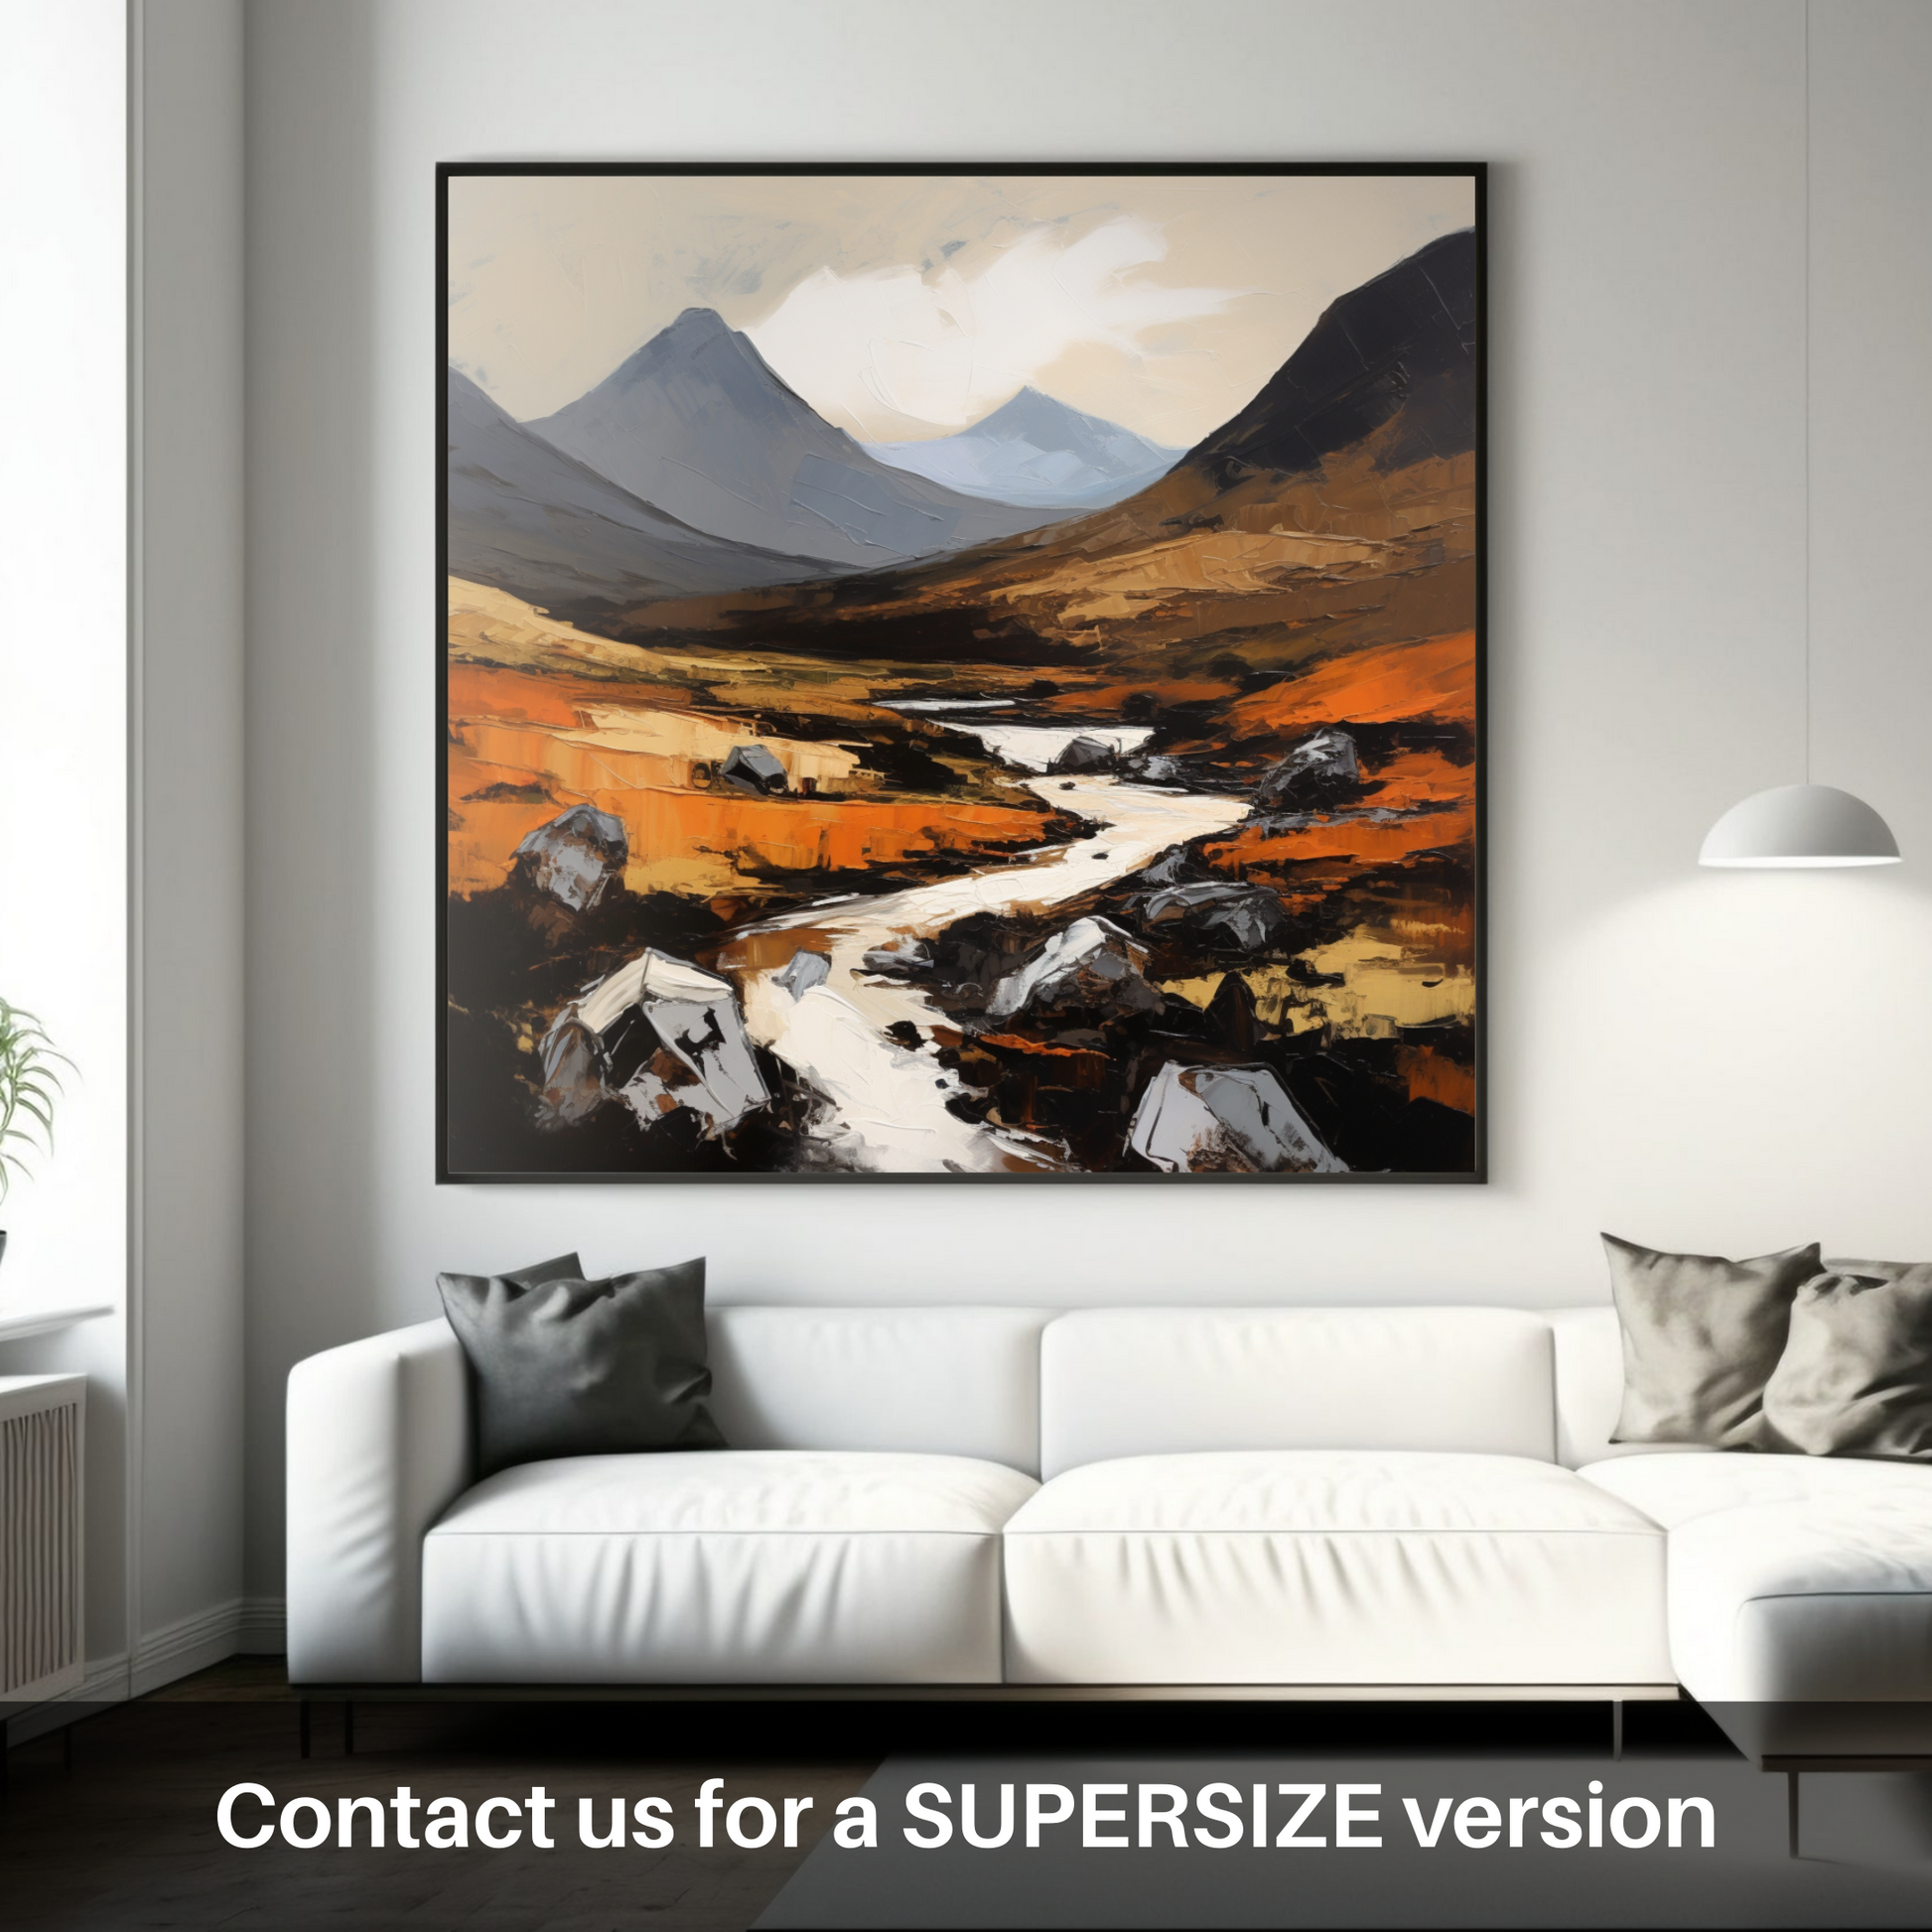 Huge supersize print of Glen Rosa, Isle of Arran